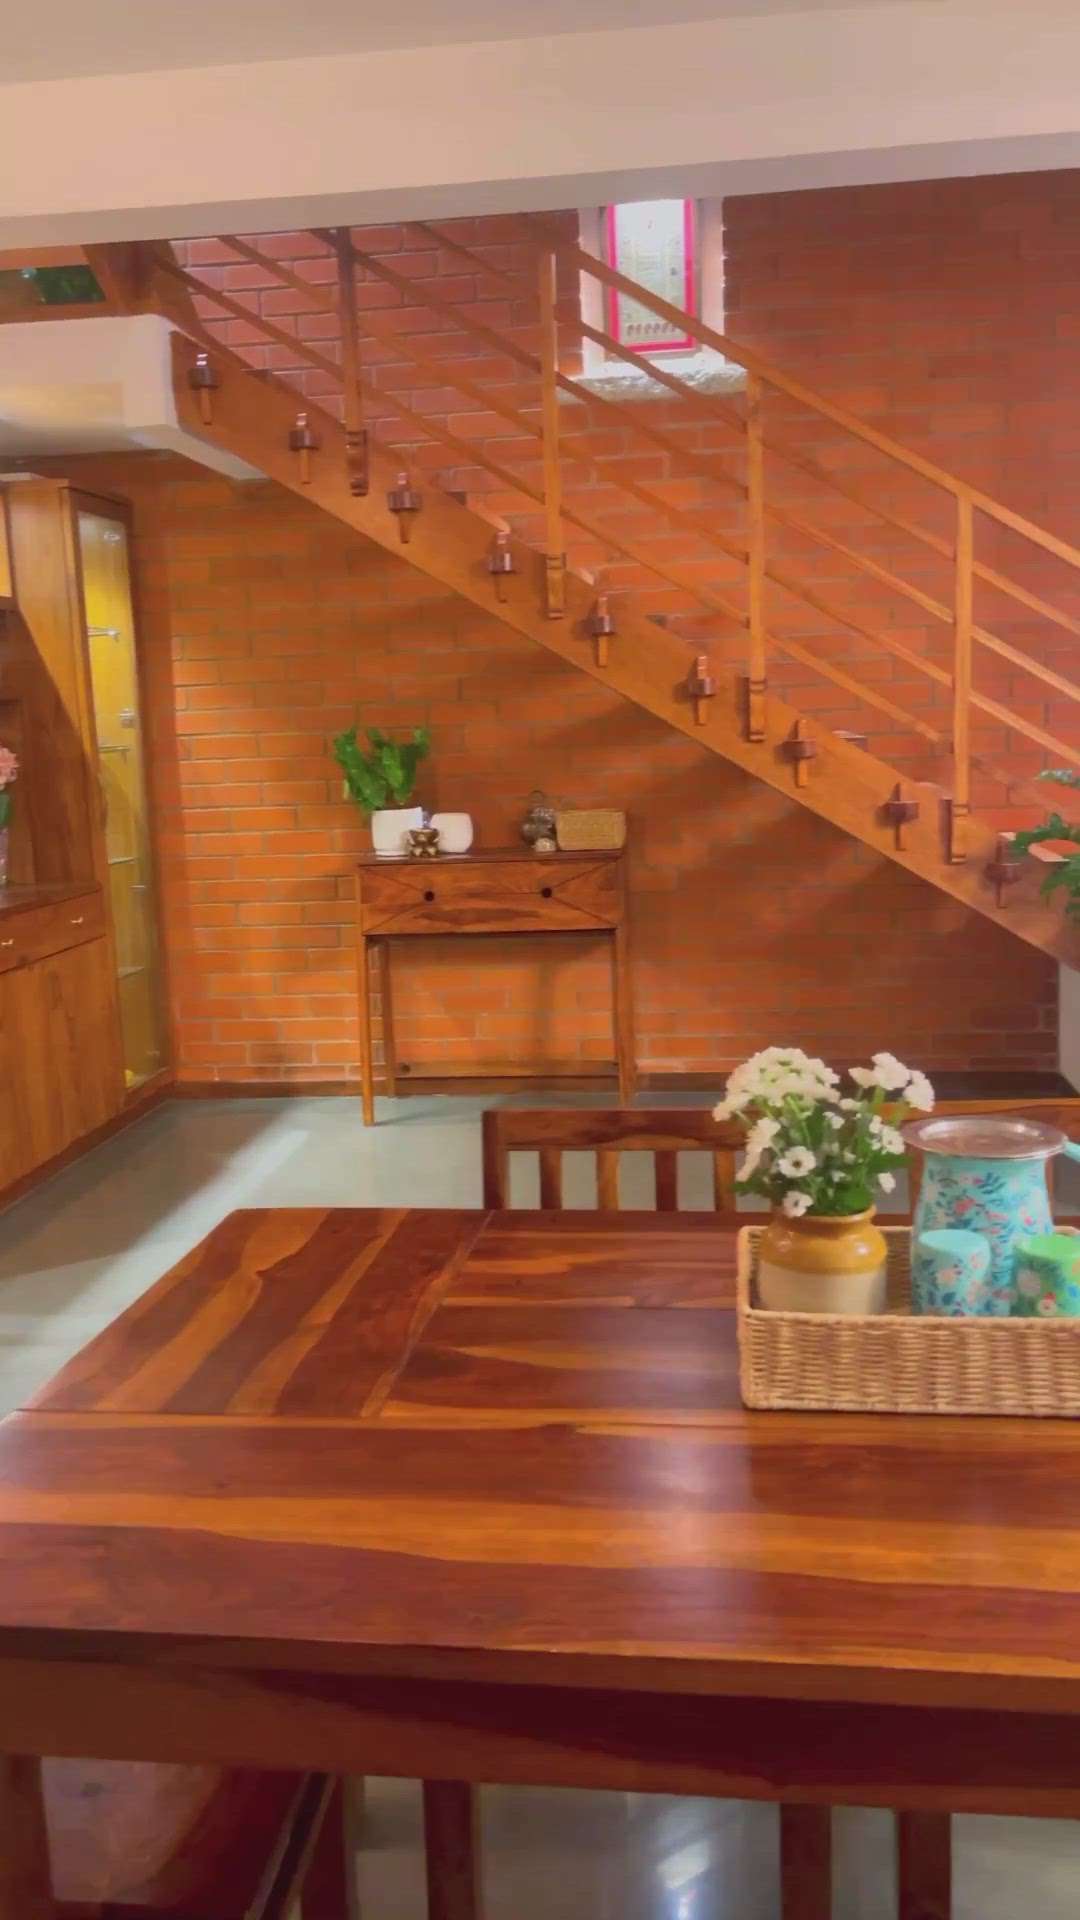 Kerala style home interiors

Credits: Sitha Vineesh
@sithavineesh